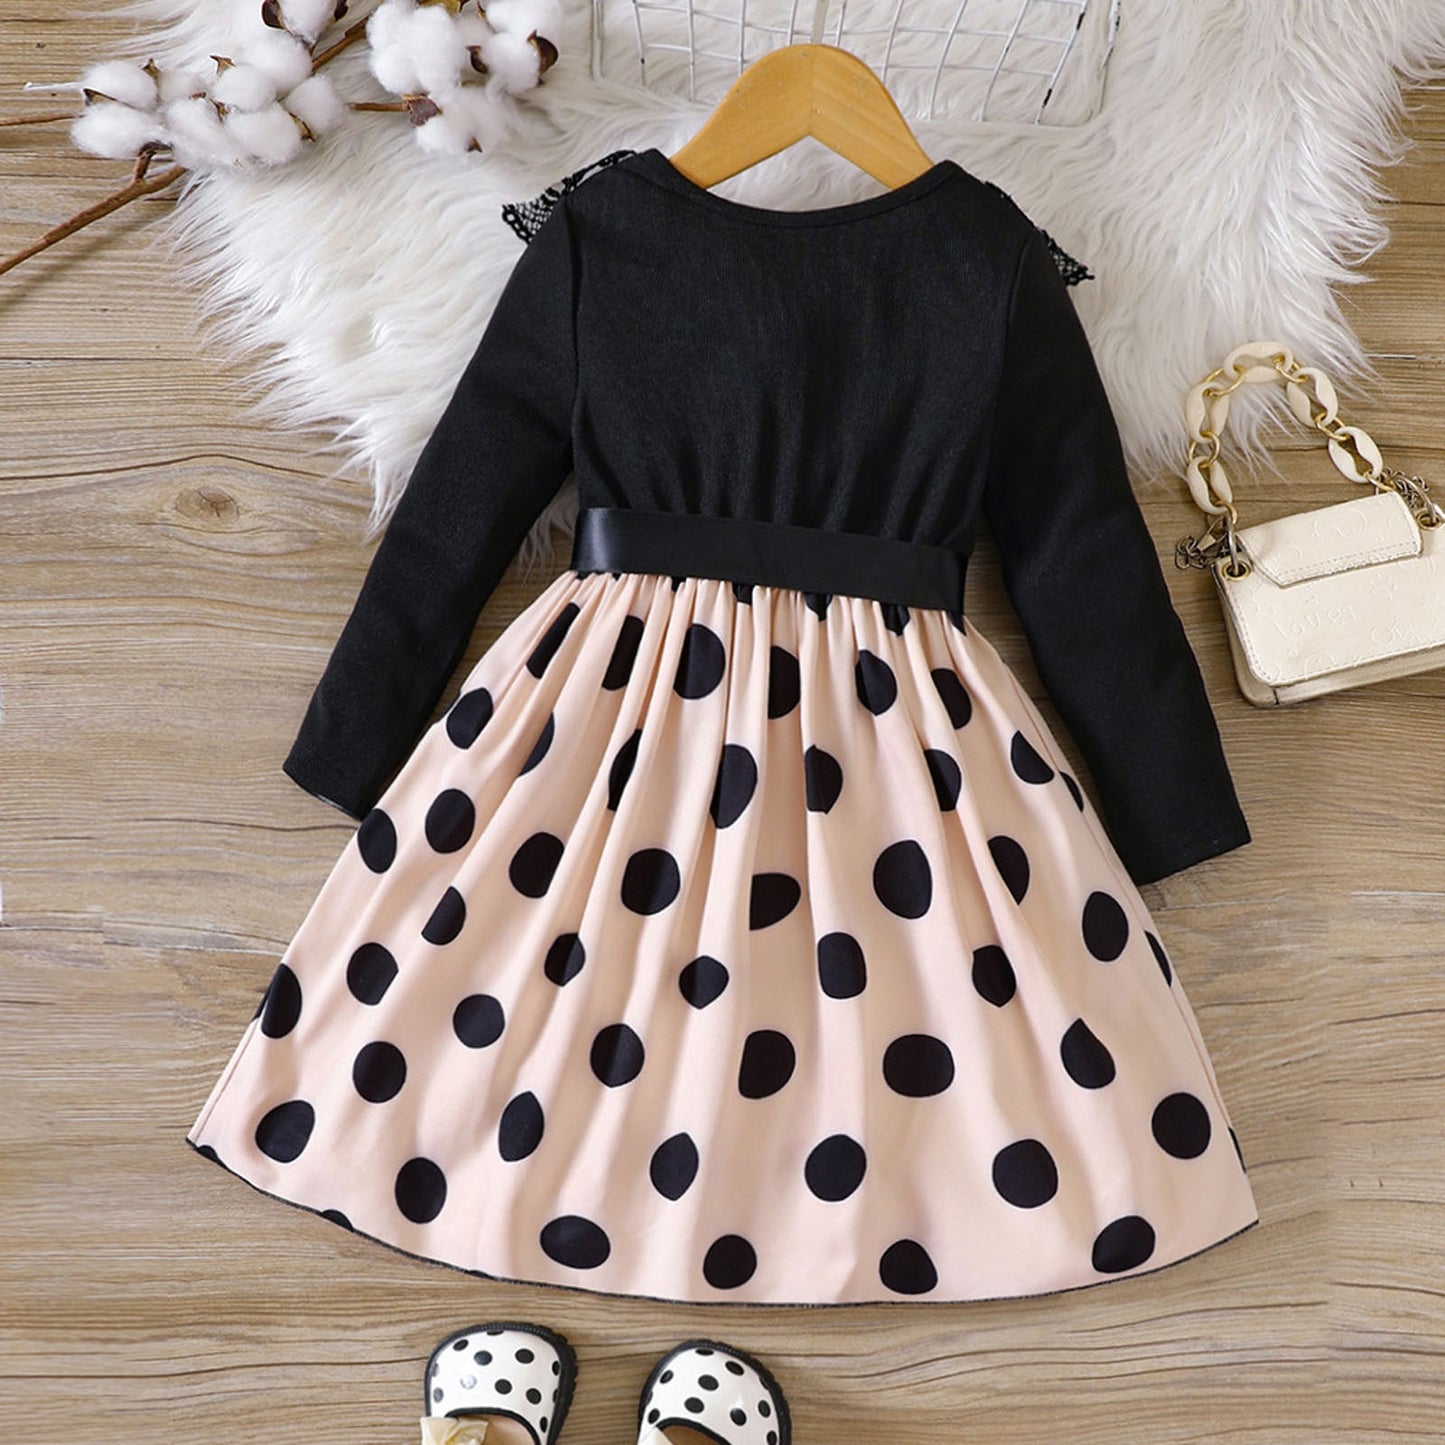 Toddler Girls Autumn Clothing Long Sleeve Black Lace Collar Polka Dots Dress - KGD8286